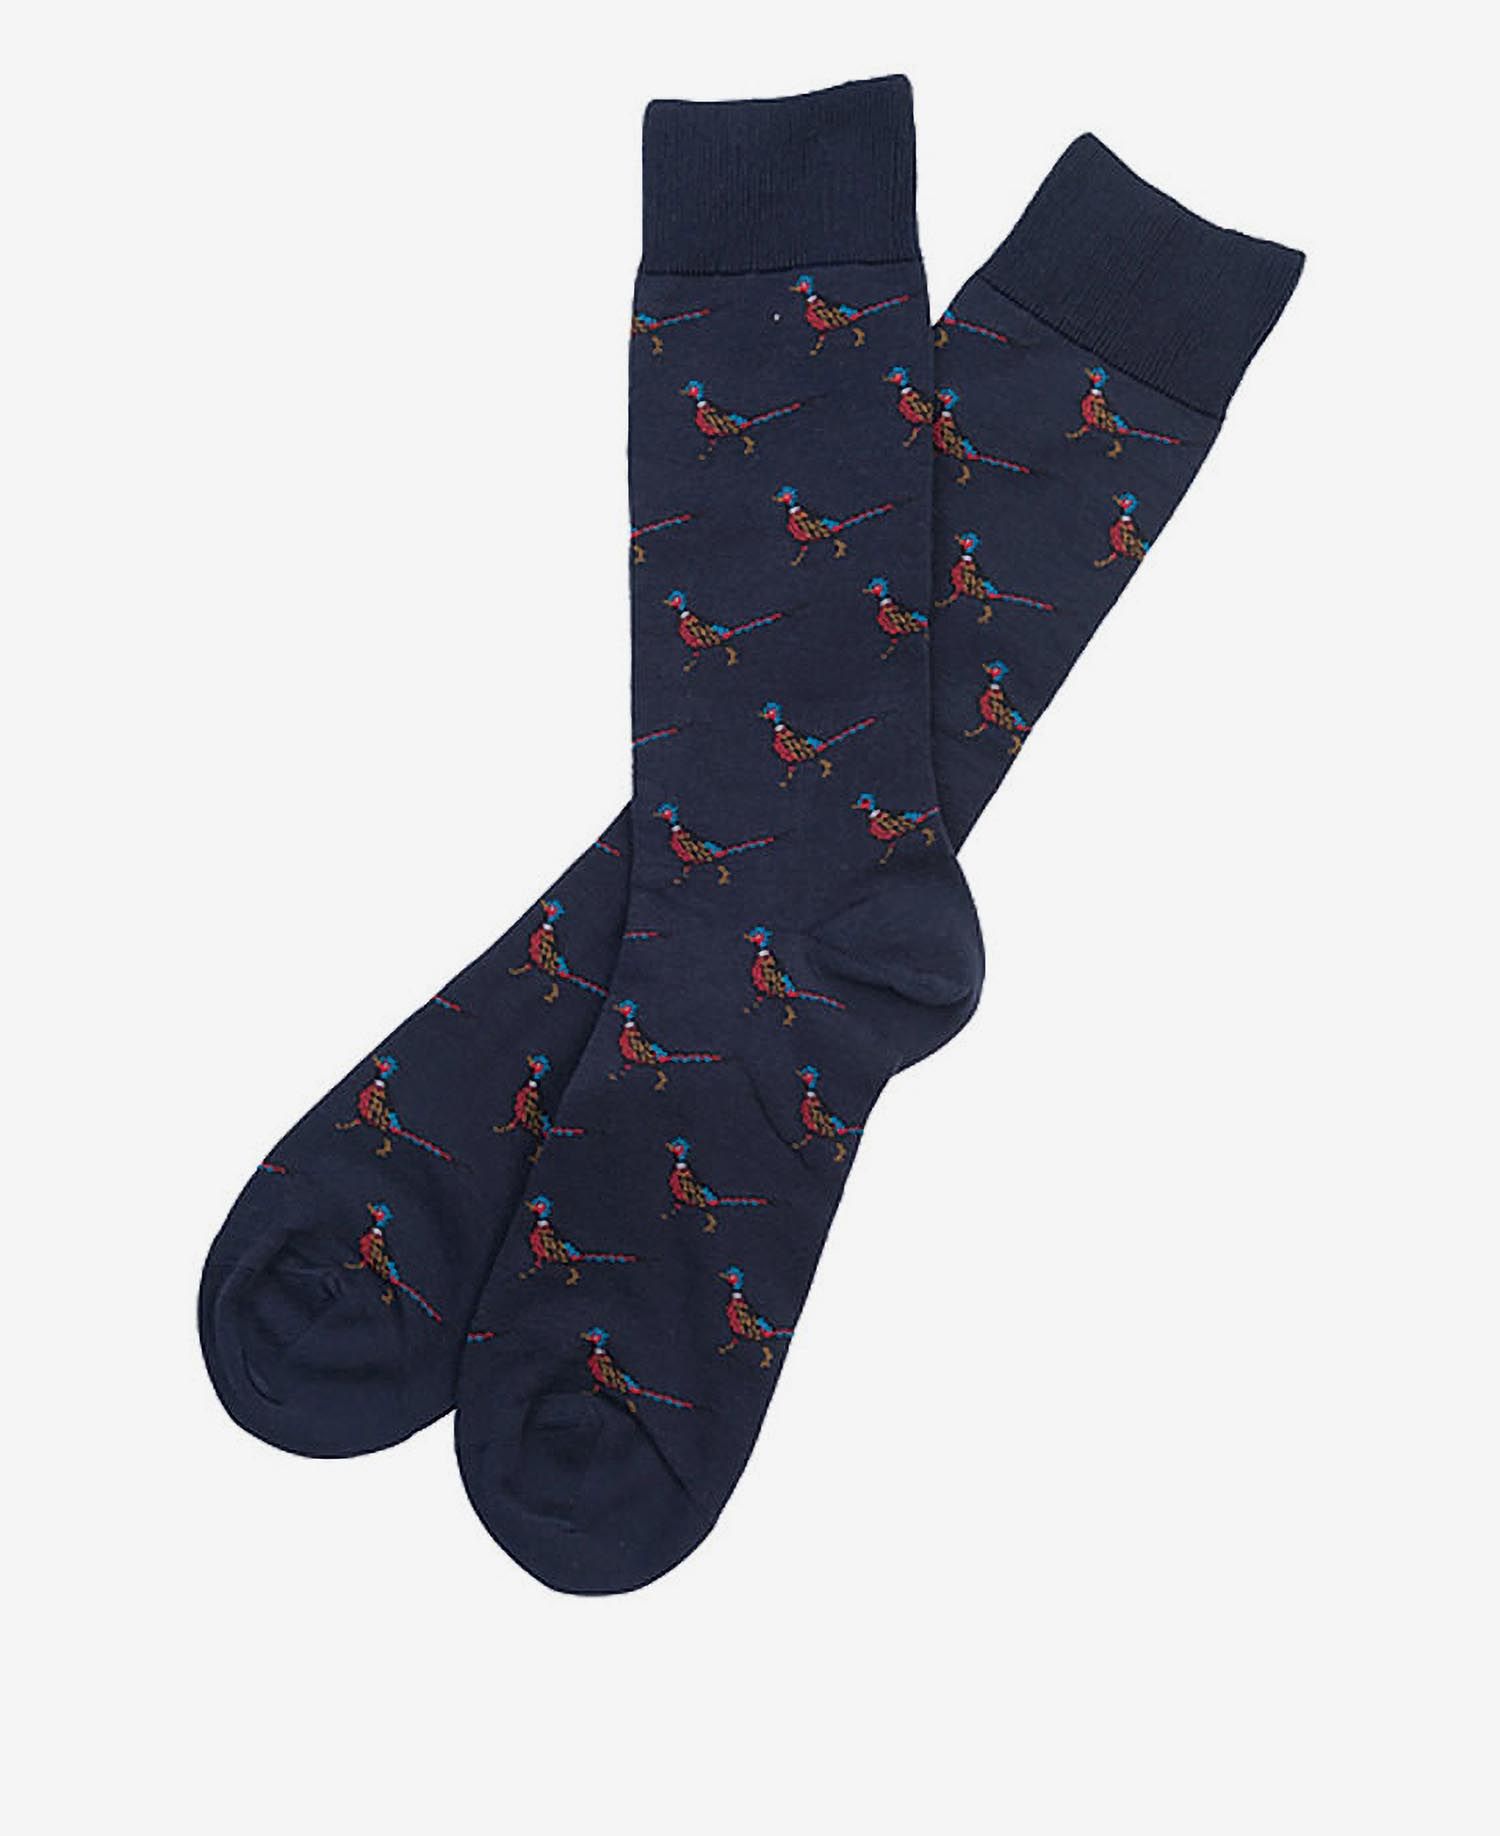 Mavin Socks - Navy Pheasant - Ruffords Country Store